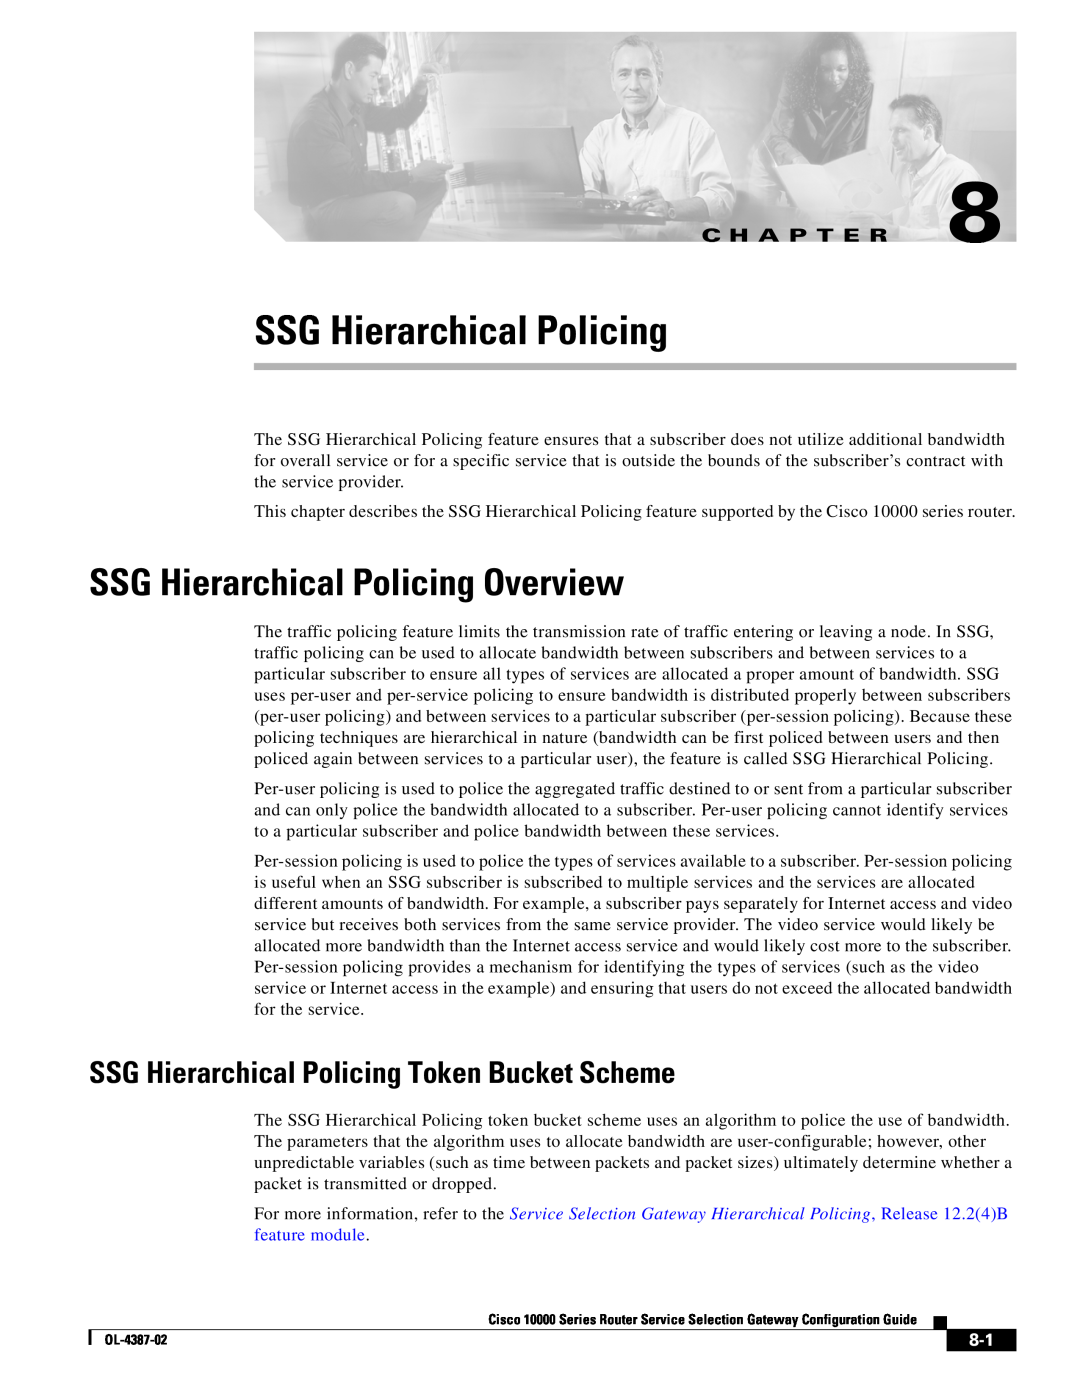 Cisco Systems OL-4387-02 manual SSG Hierarchical Policing Overview, SSG Hierarchical Policing Token Bucket Scheme 